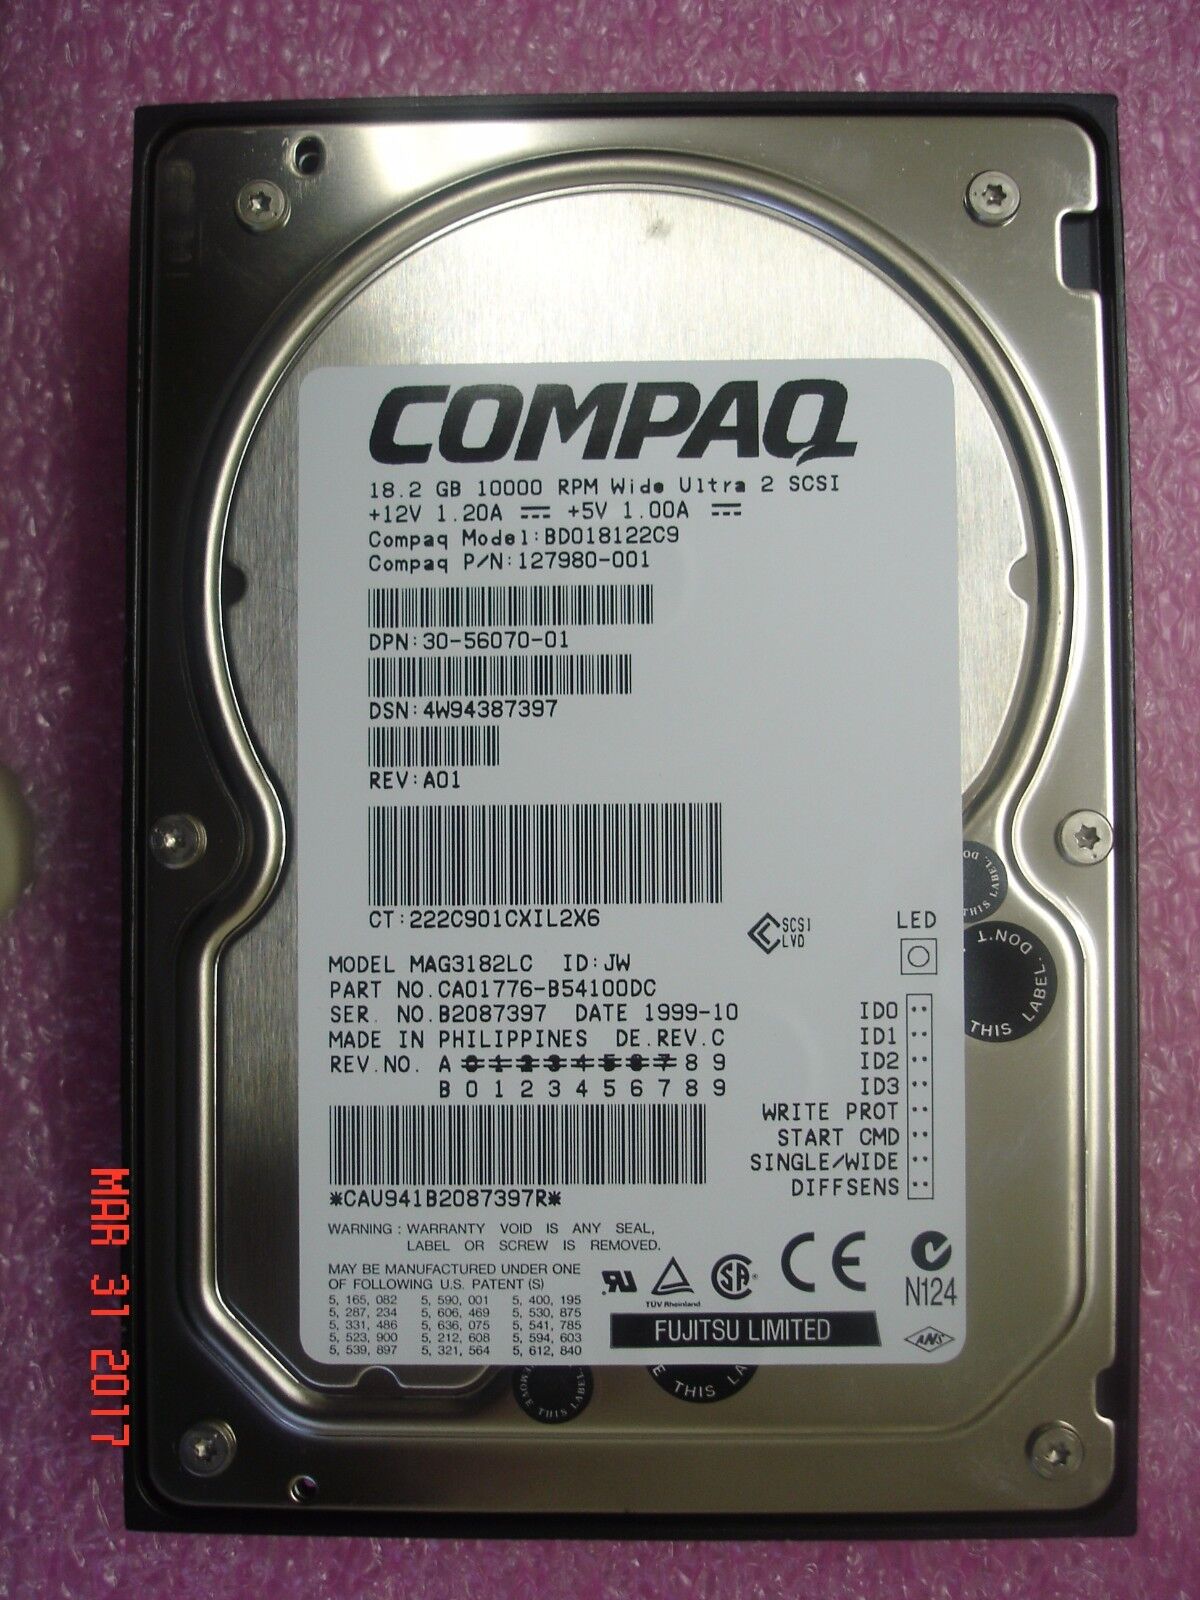 127980-001 COMPAQ 30-56070-01 18GB 10K WU2 SCSI HDD, NEW OLD STOCK, DS-RZ2EF-SB 